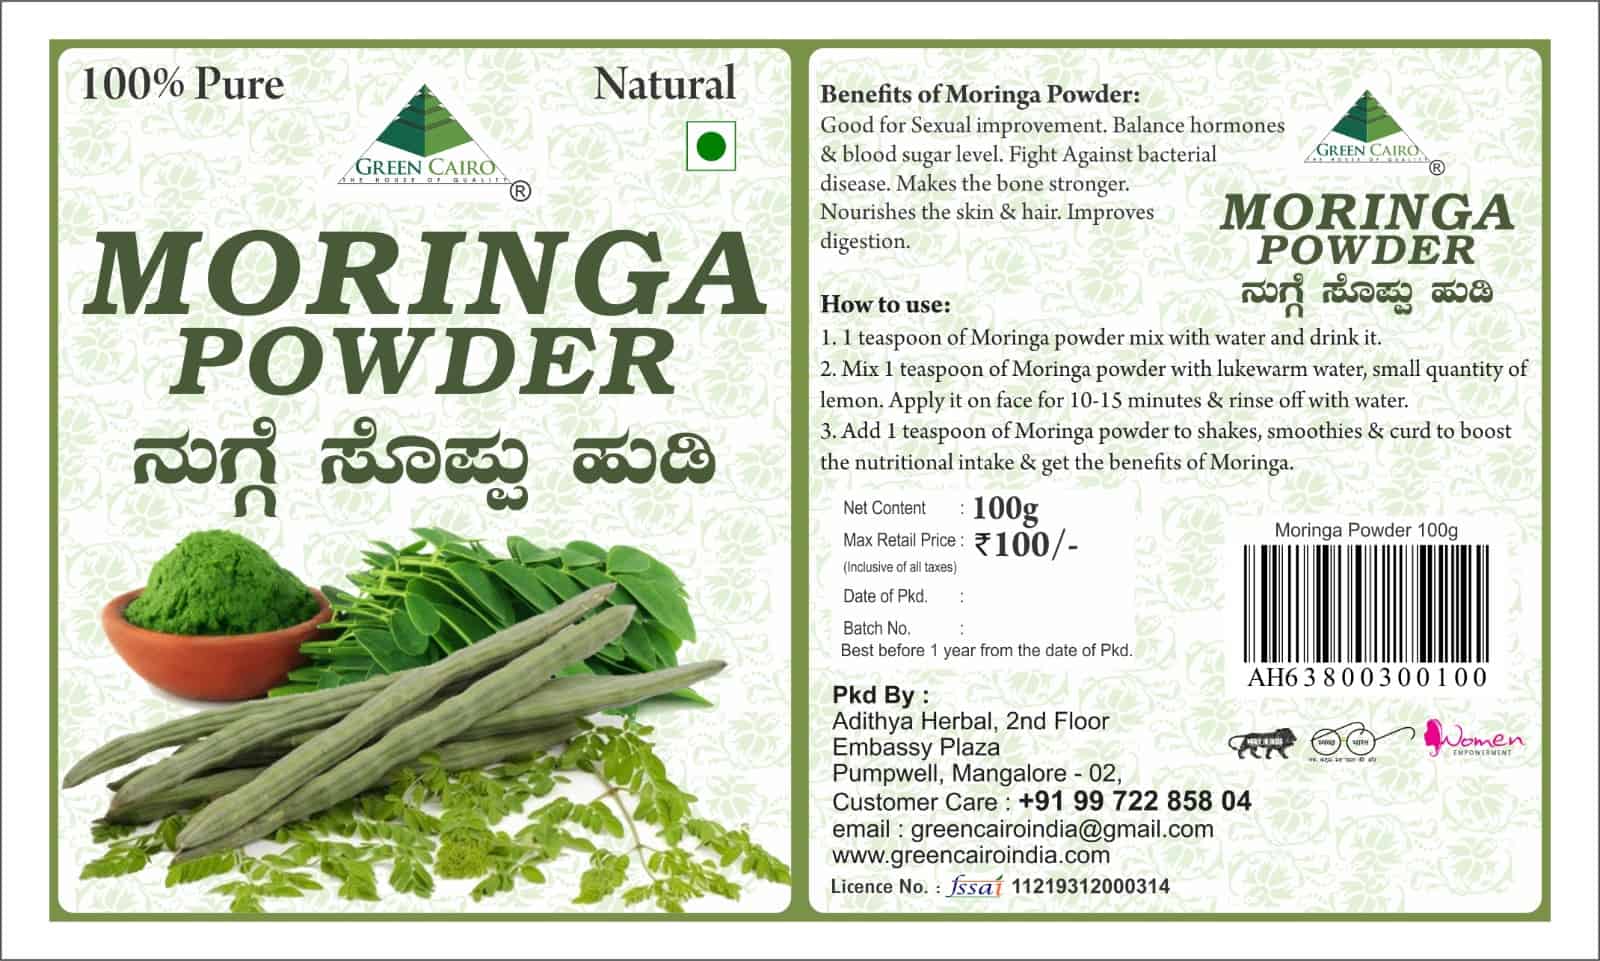 Moringa Powder 100g - Green Cairo